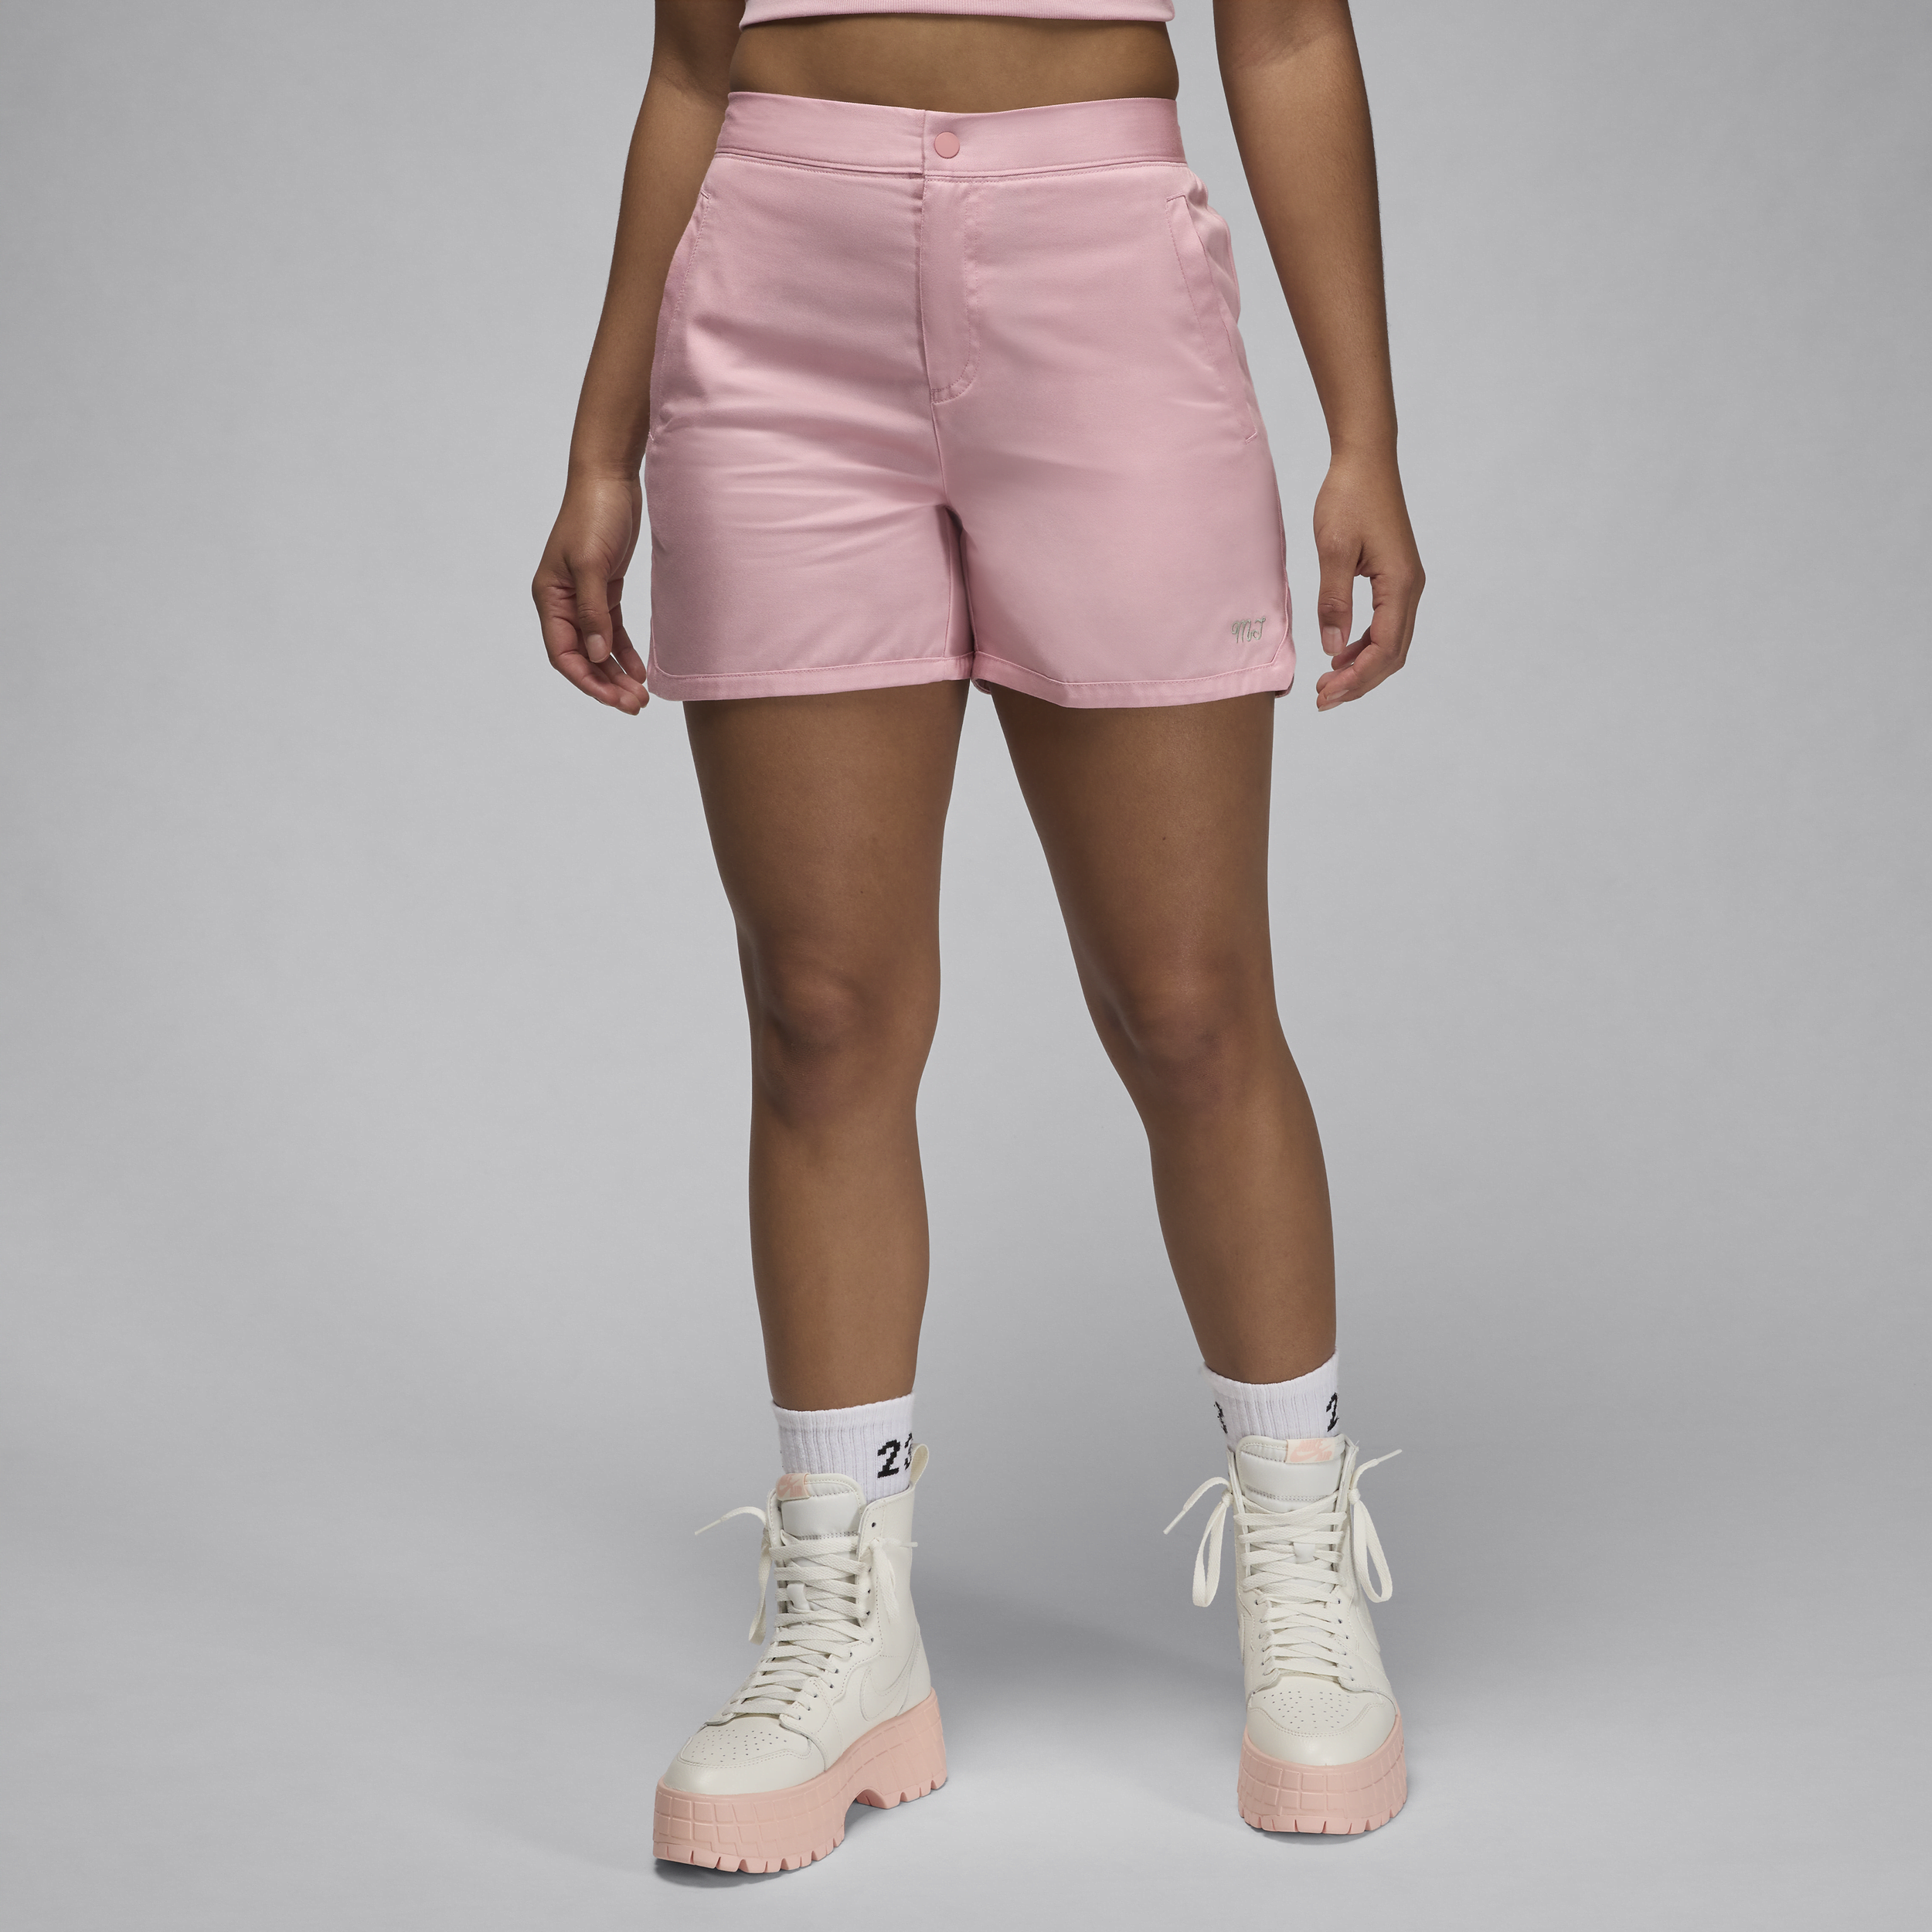 Jordan Pantalón corto de tejido Woven - Mujer - Rosa